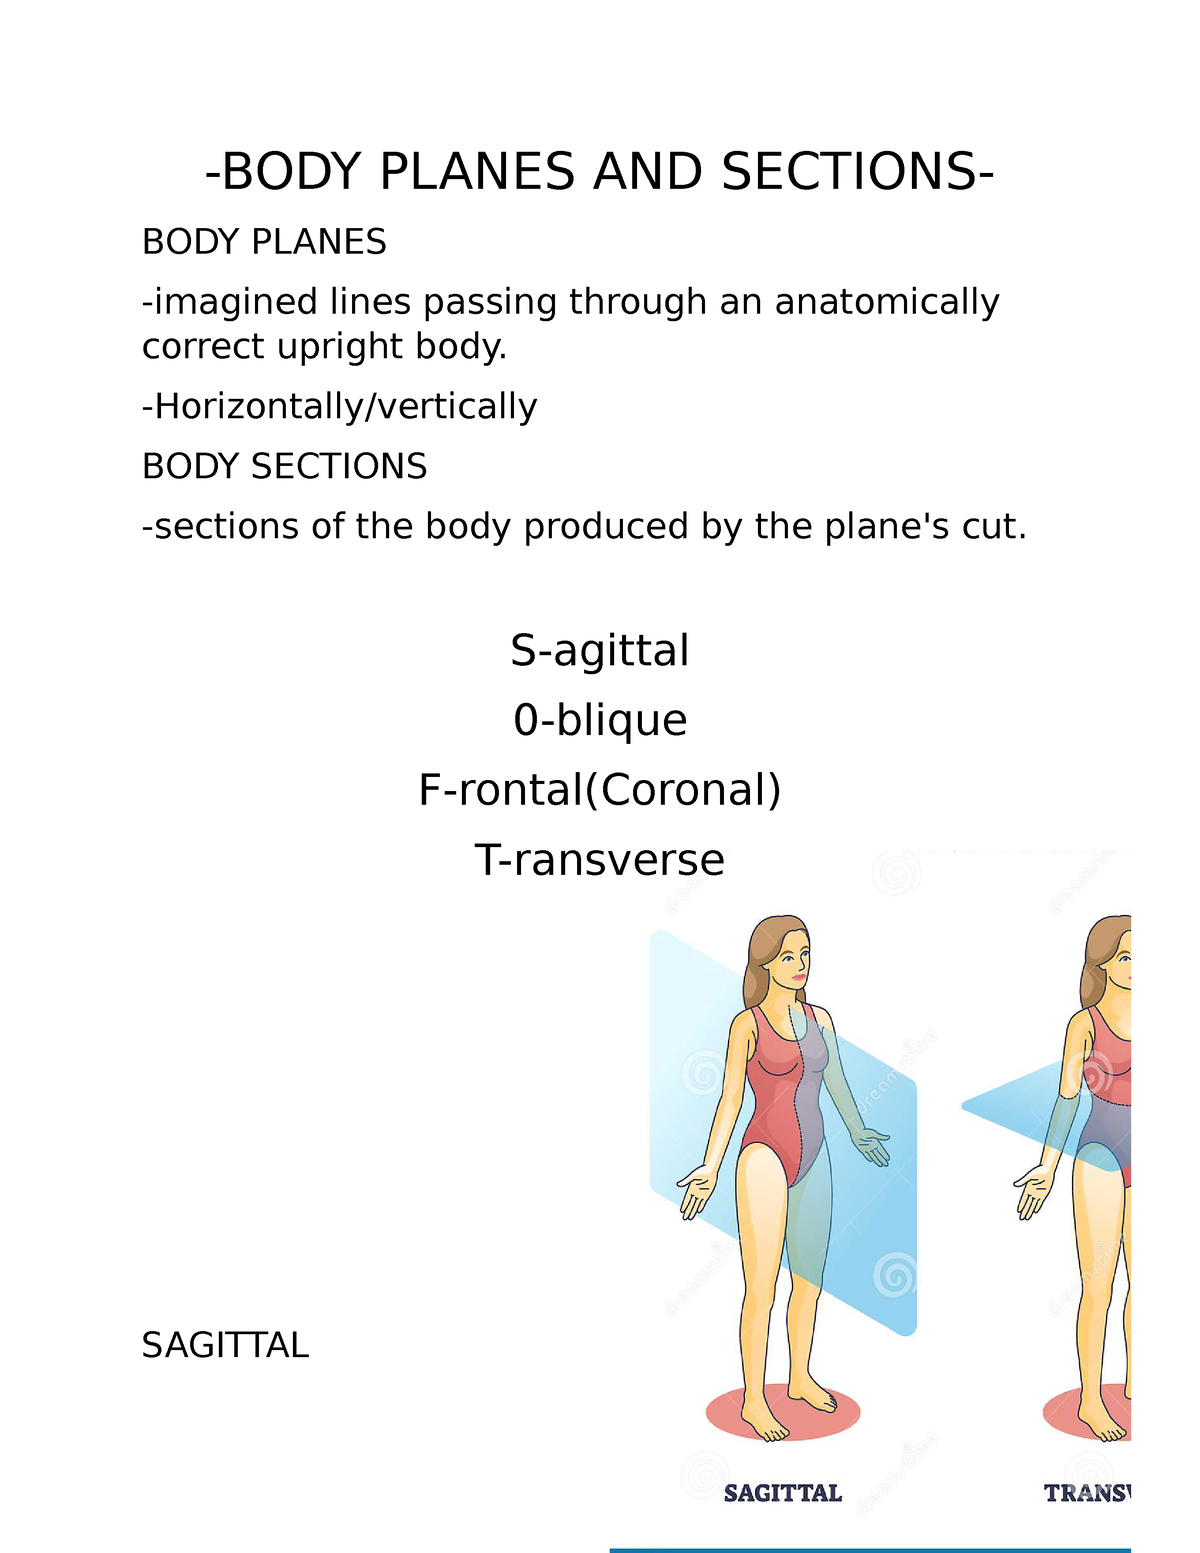 BODY Planes AND Sections -BODY PLANES AND SECTIONS- BODY PLANES ...